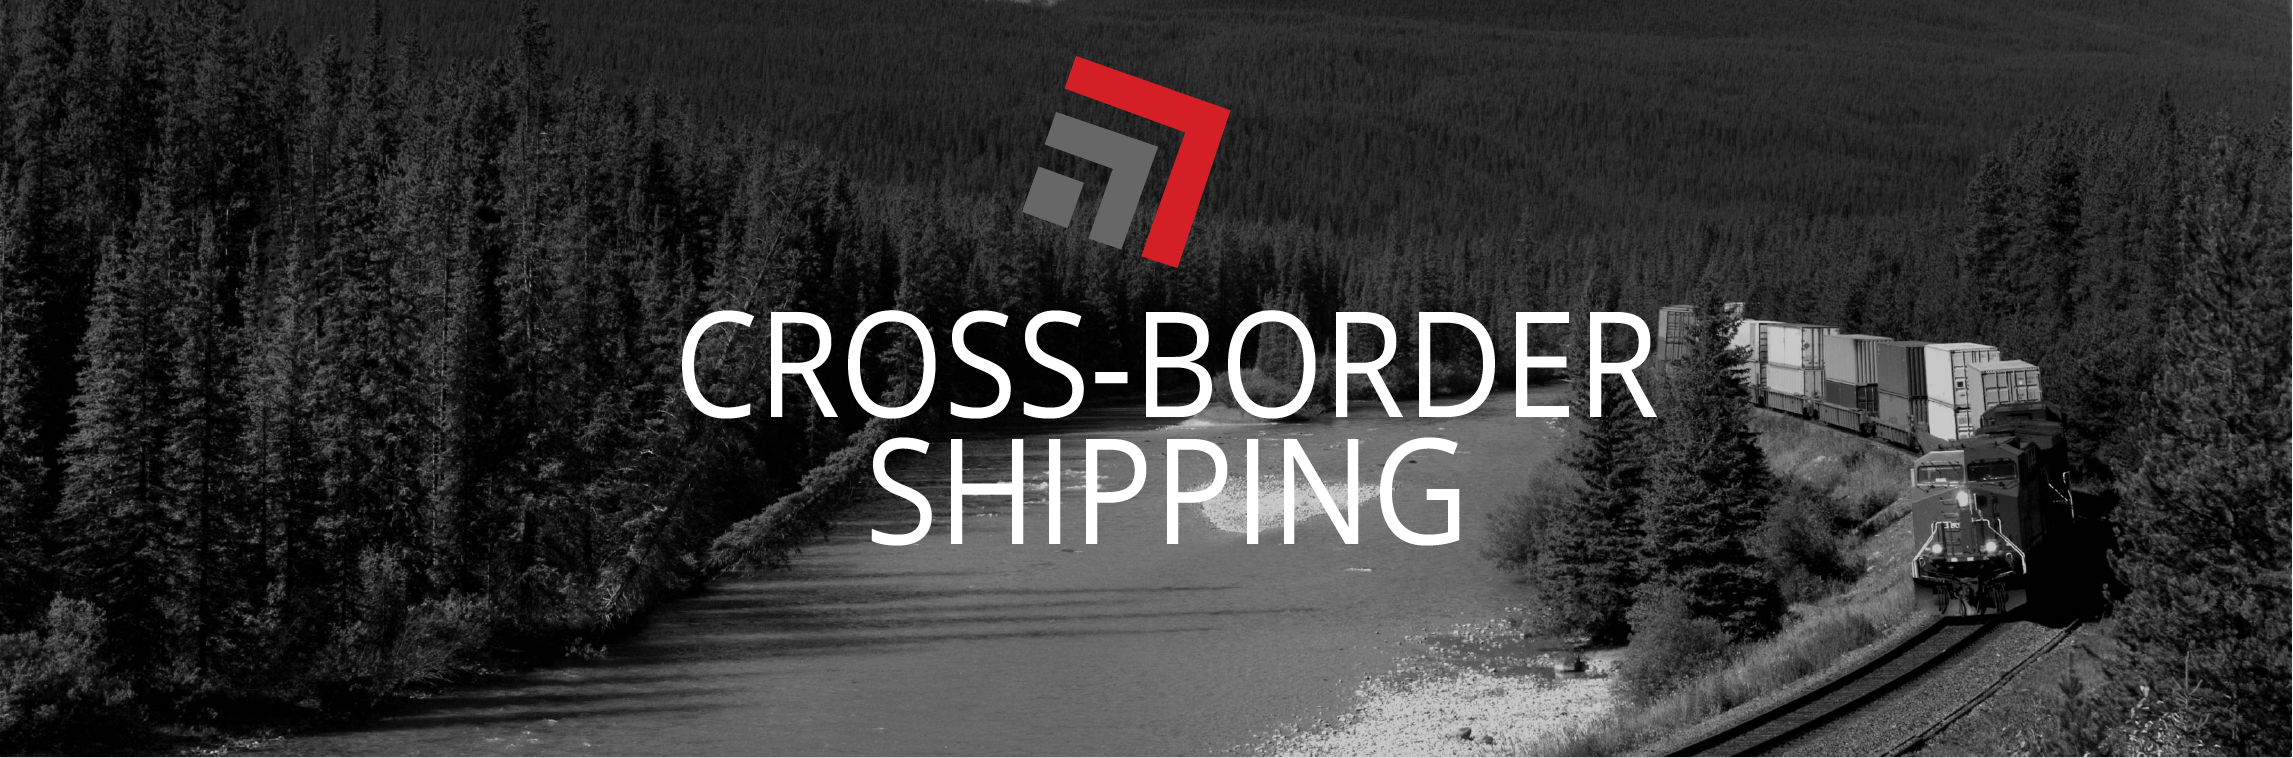 Cross-Border Shipping